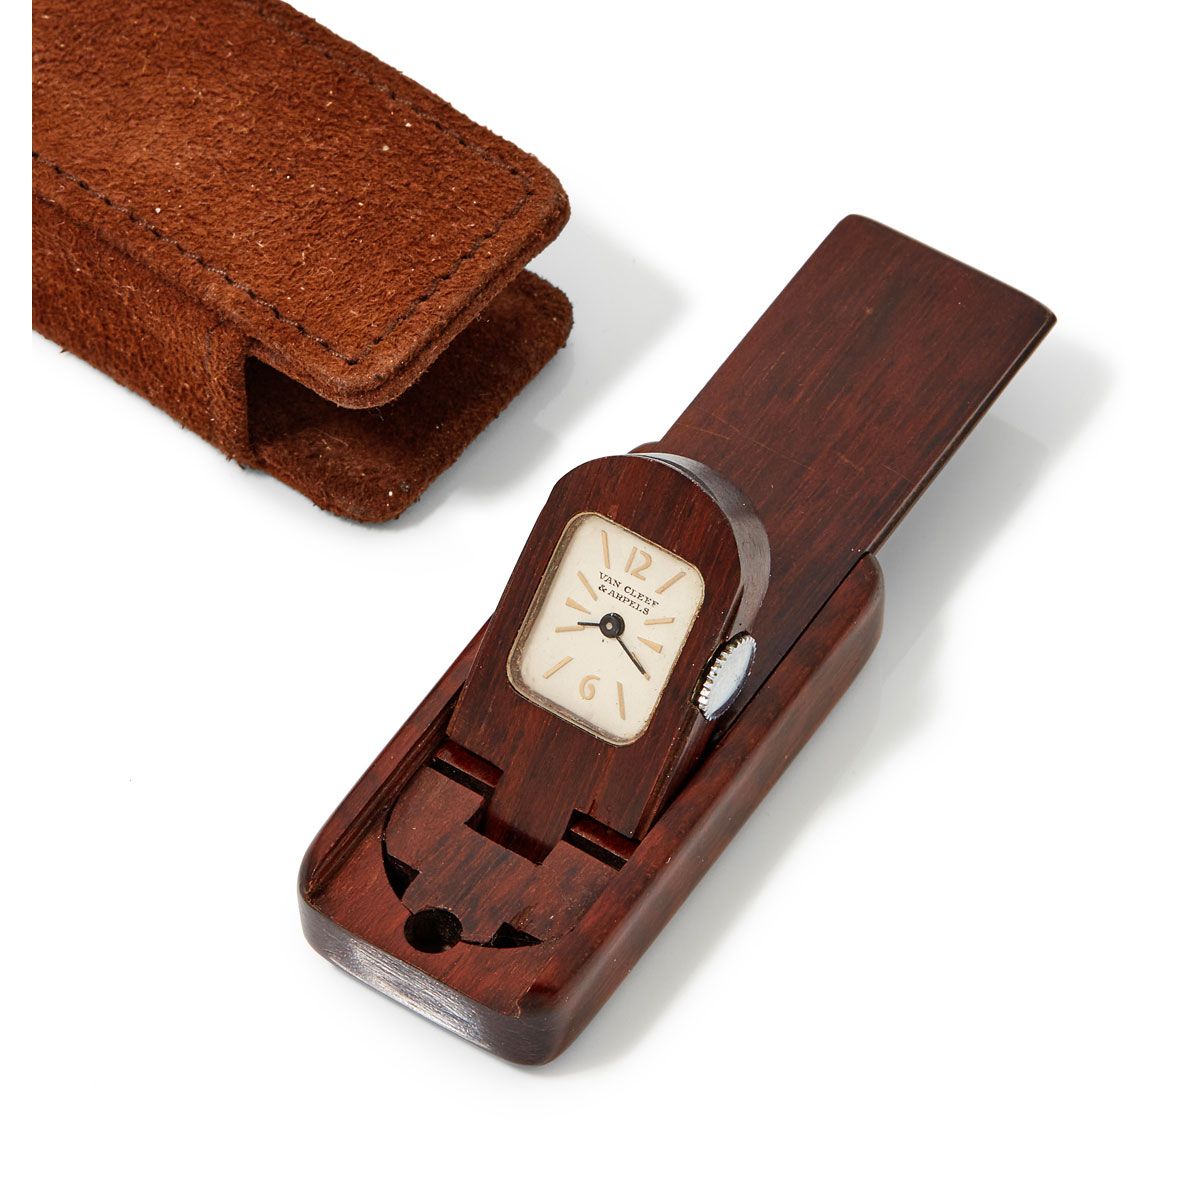 Null Van Cleef & Arpels, purse watch, vers 1960.

Une mini pendulette de sac en &hellip;